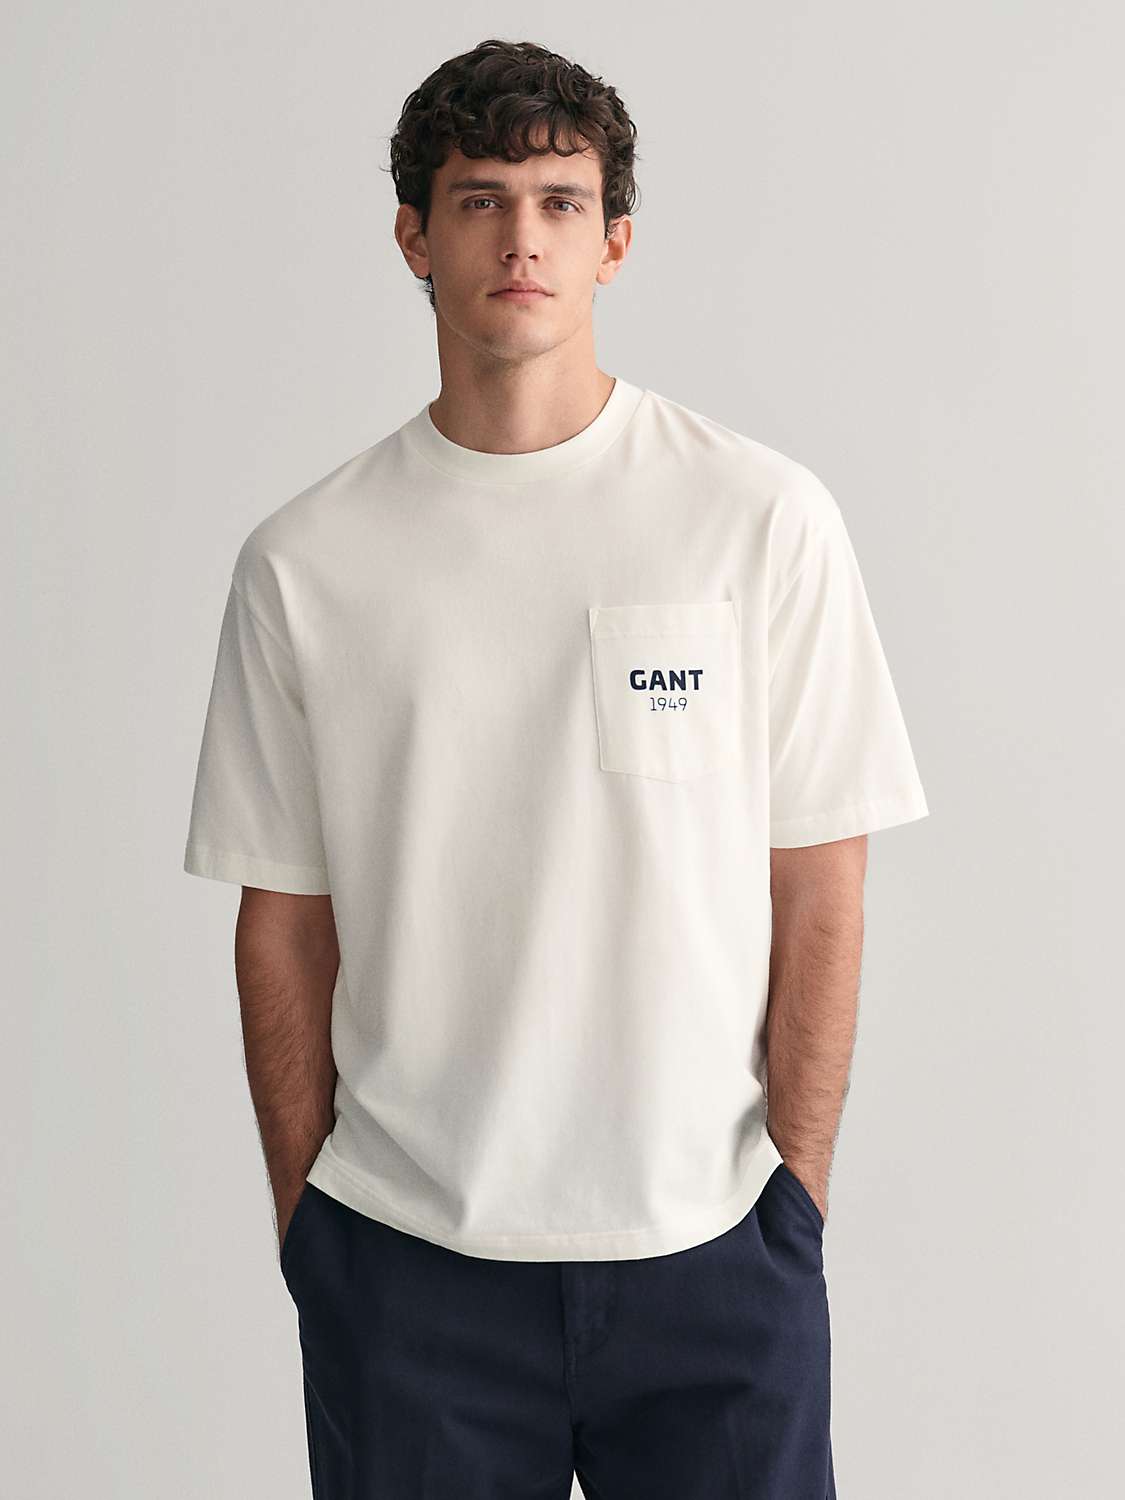 Buy GANT Graphic Short Sleeve T-Shirt, White Online at johnlewis.com